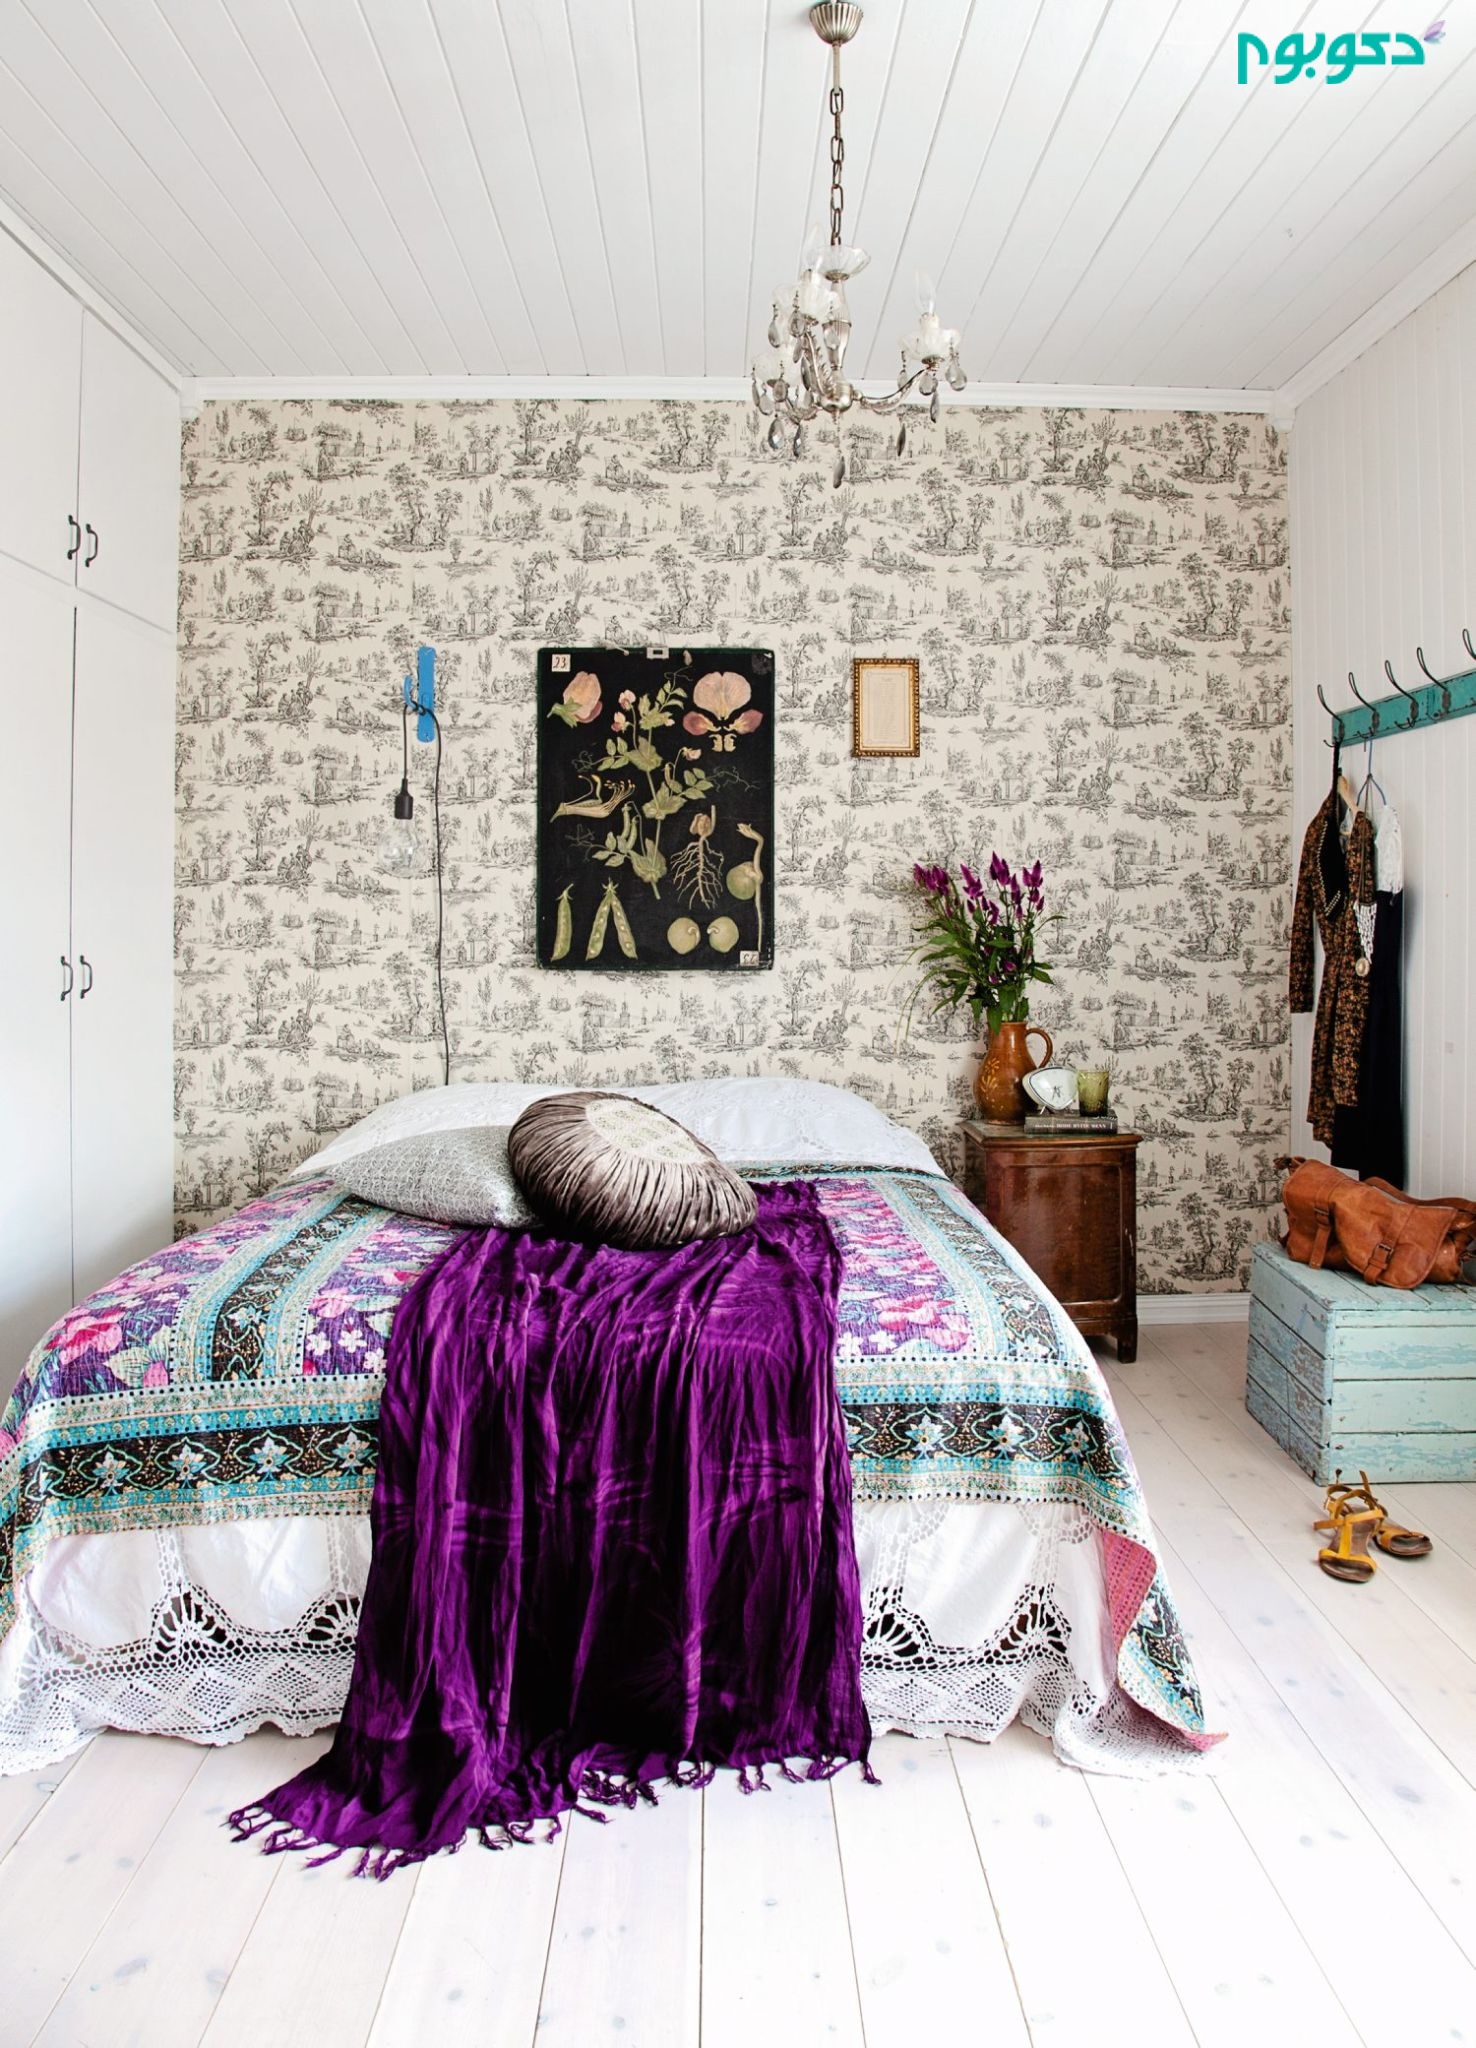 14-best-bedroom-design-ideas-homebnc-738x1024@2x.jpg